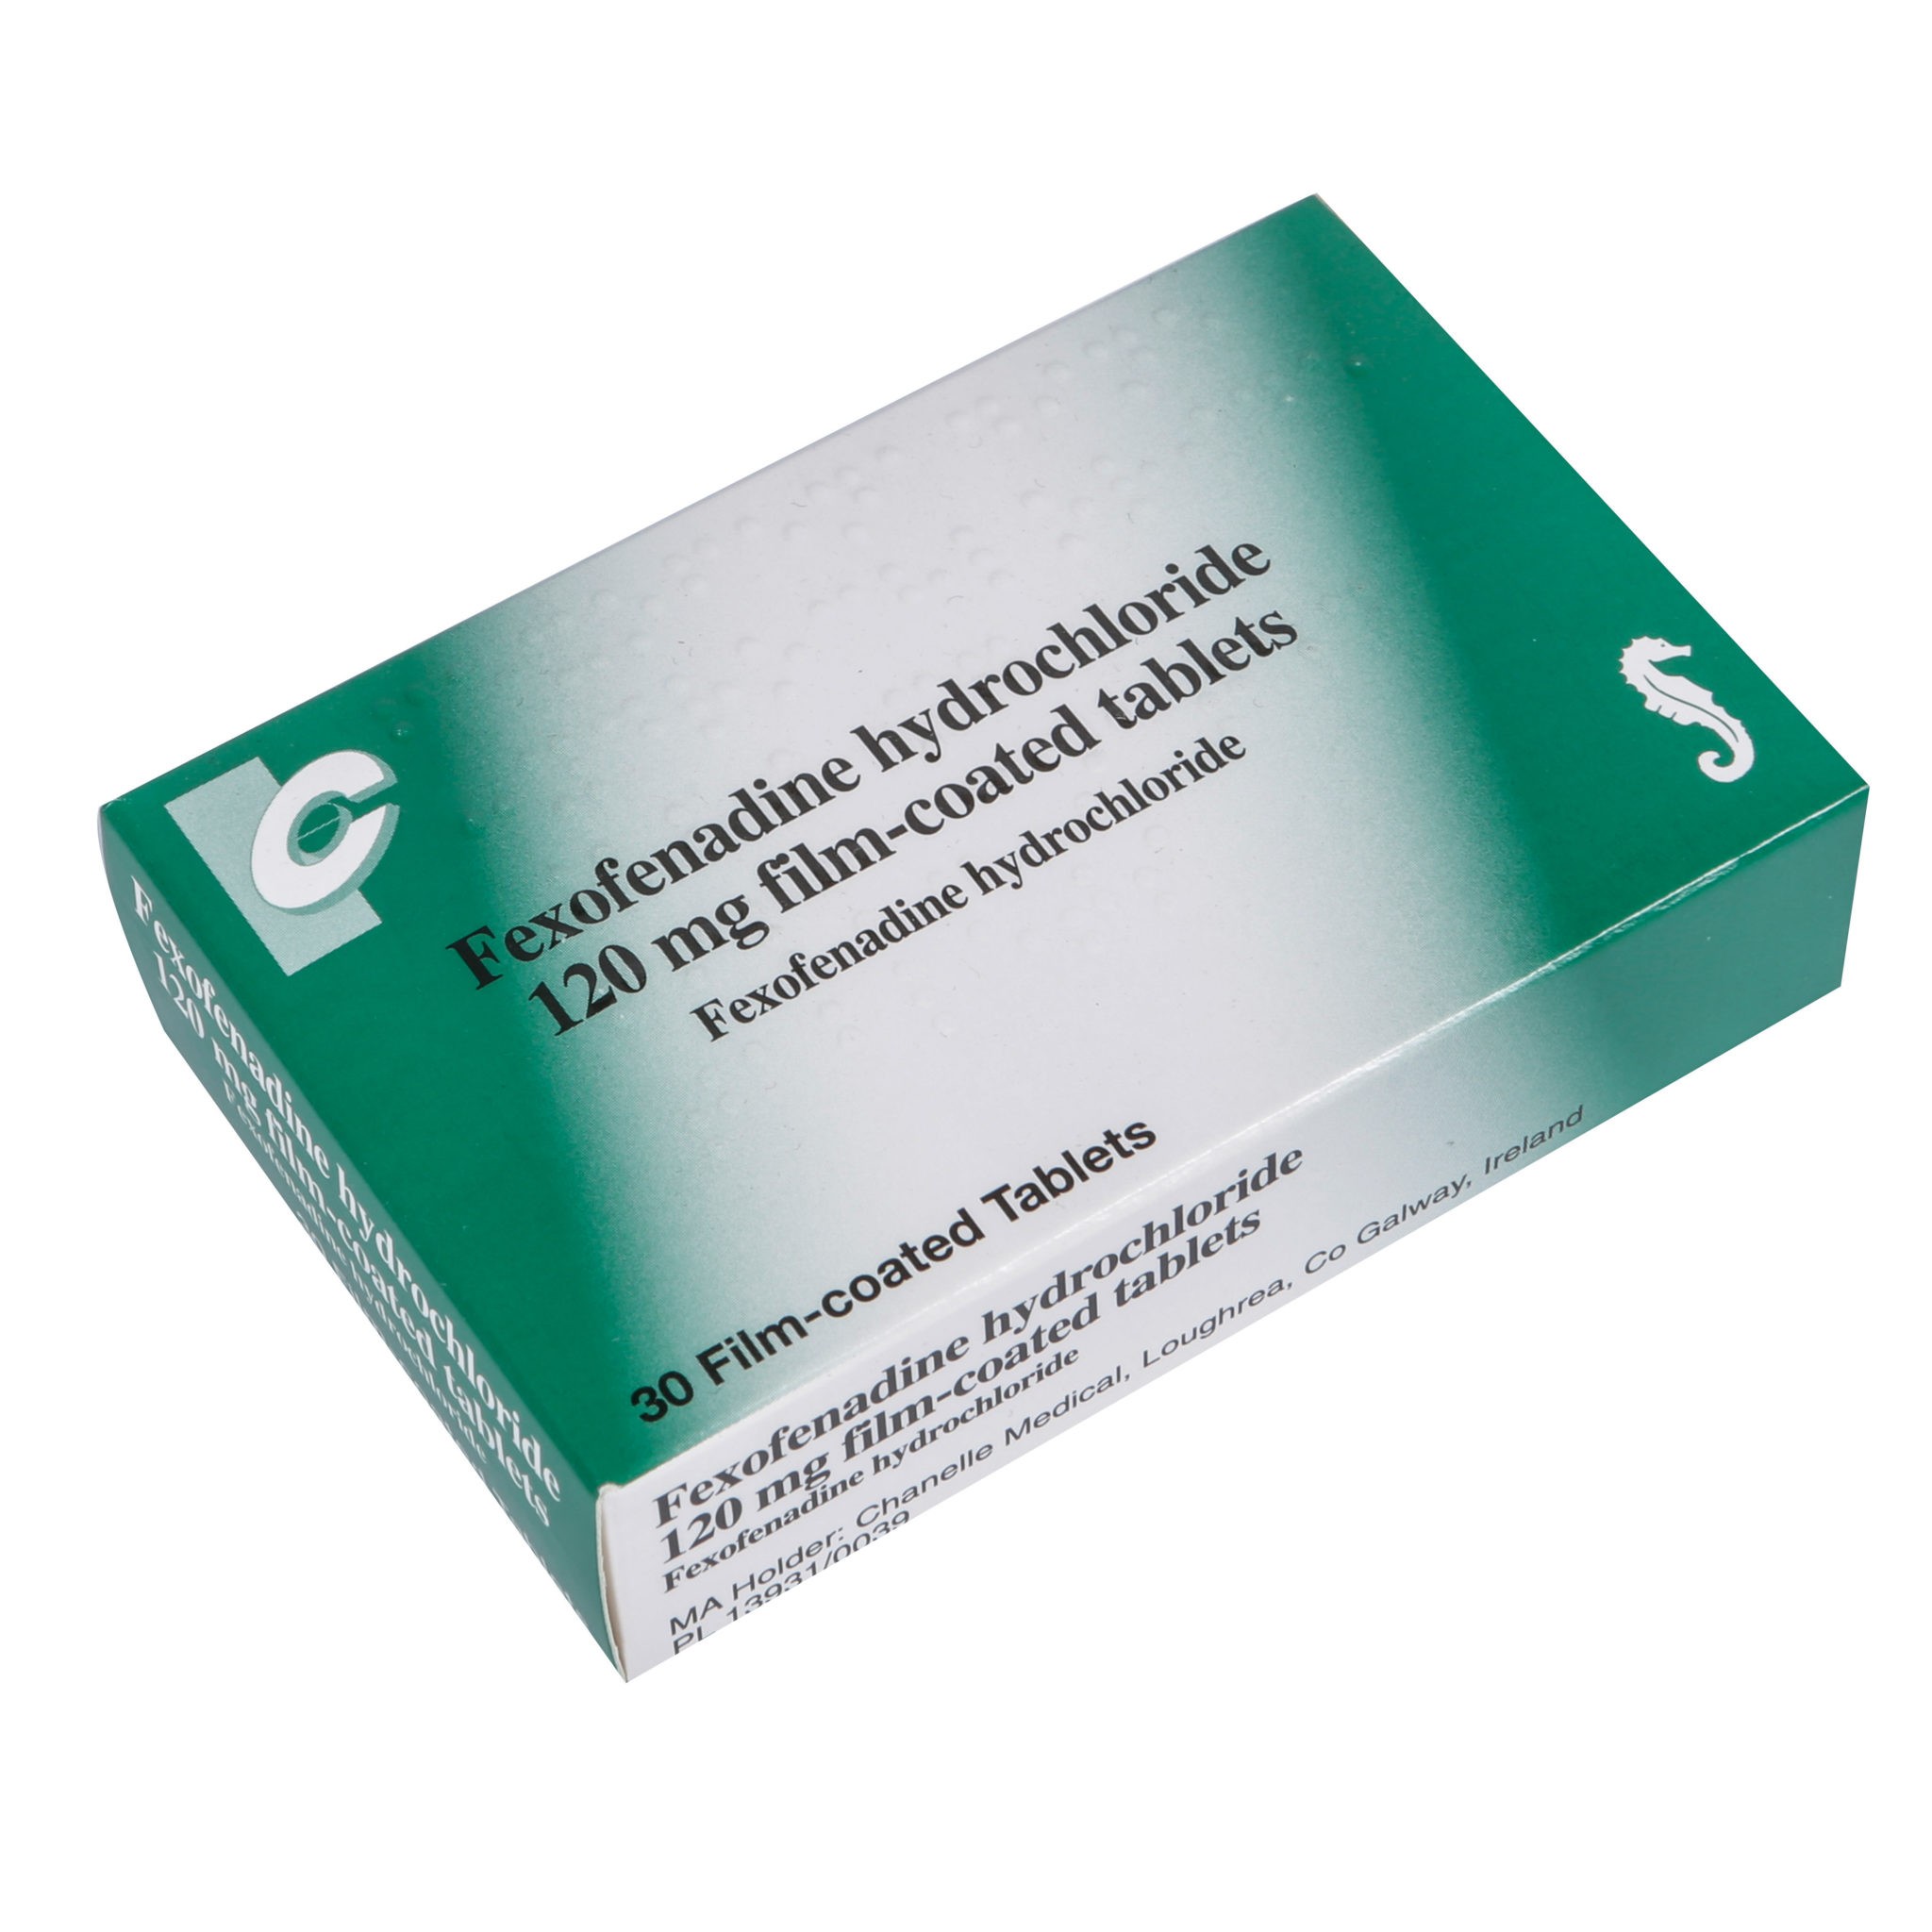 Fexofenadine 120mg Tablets (30 Tablets)